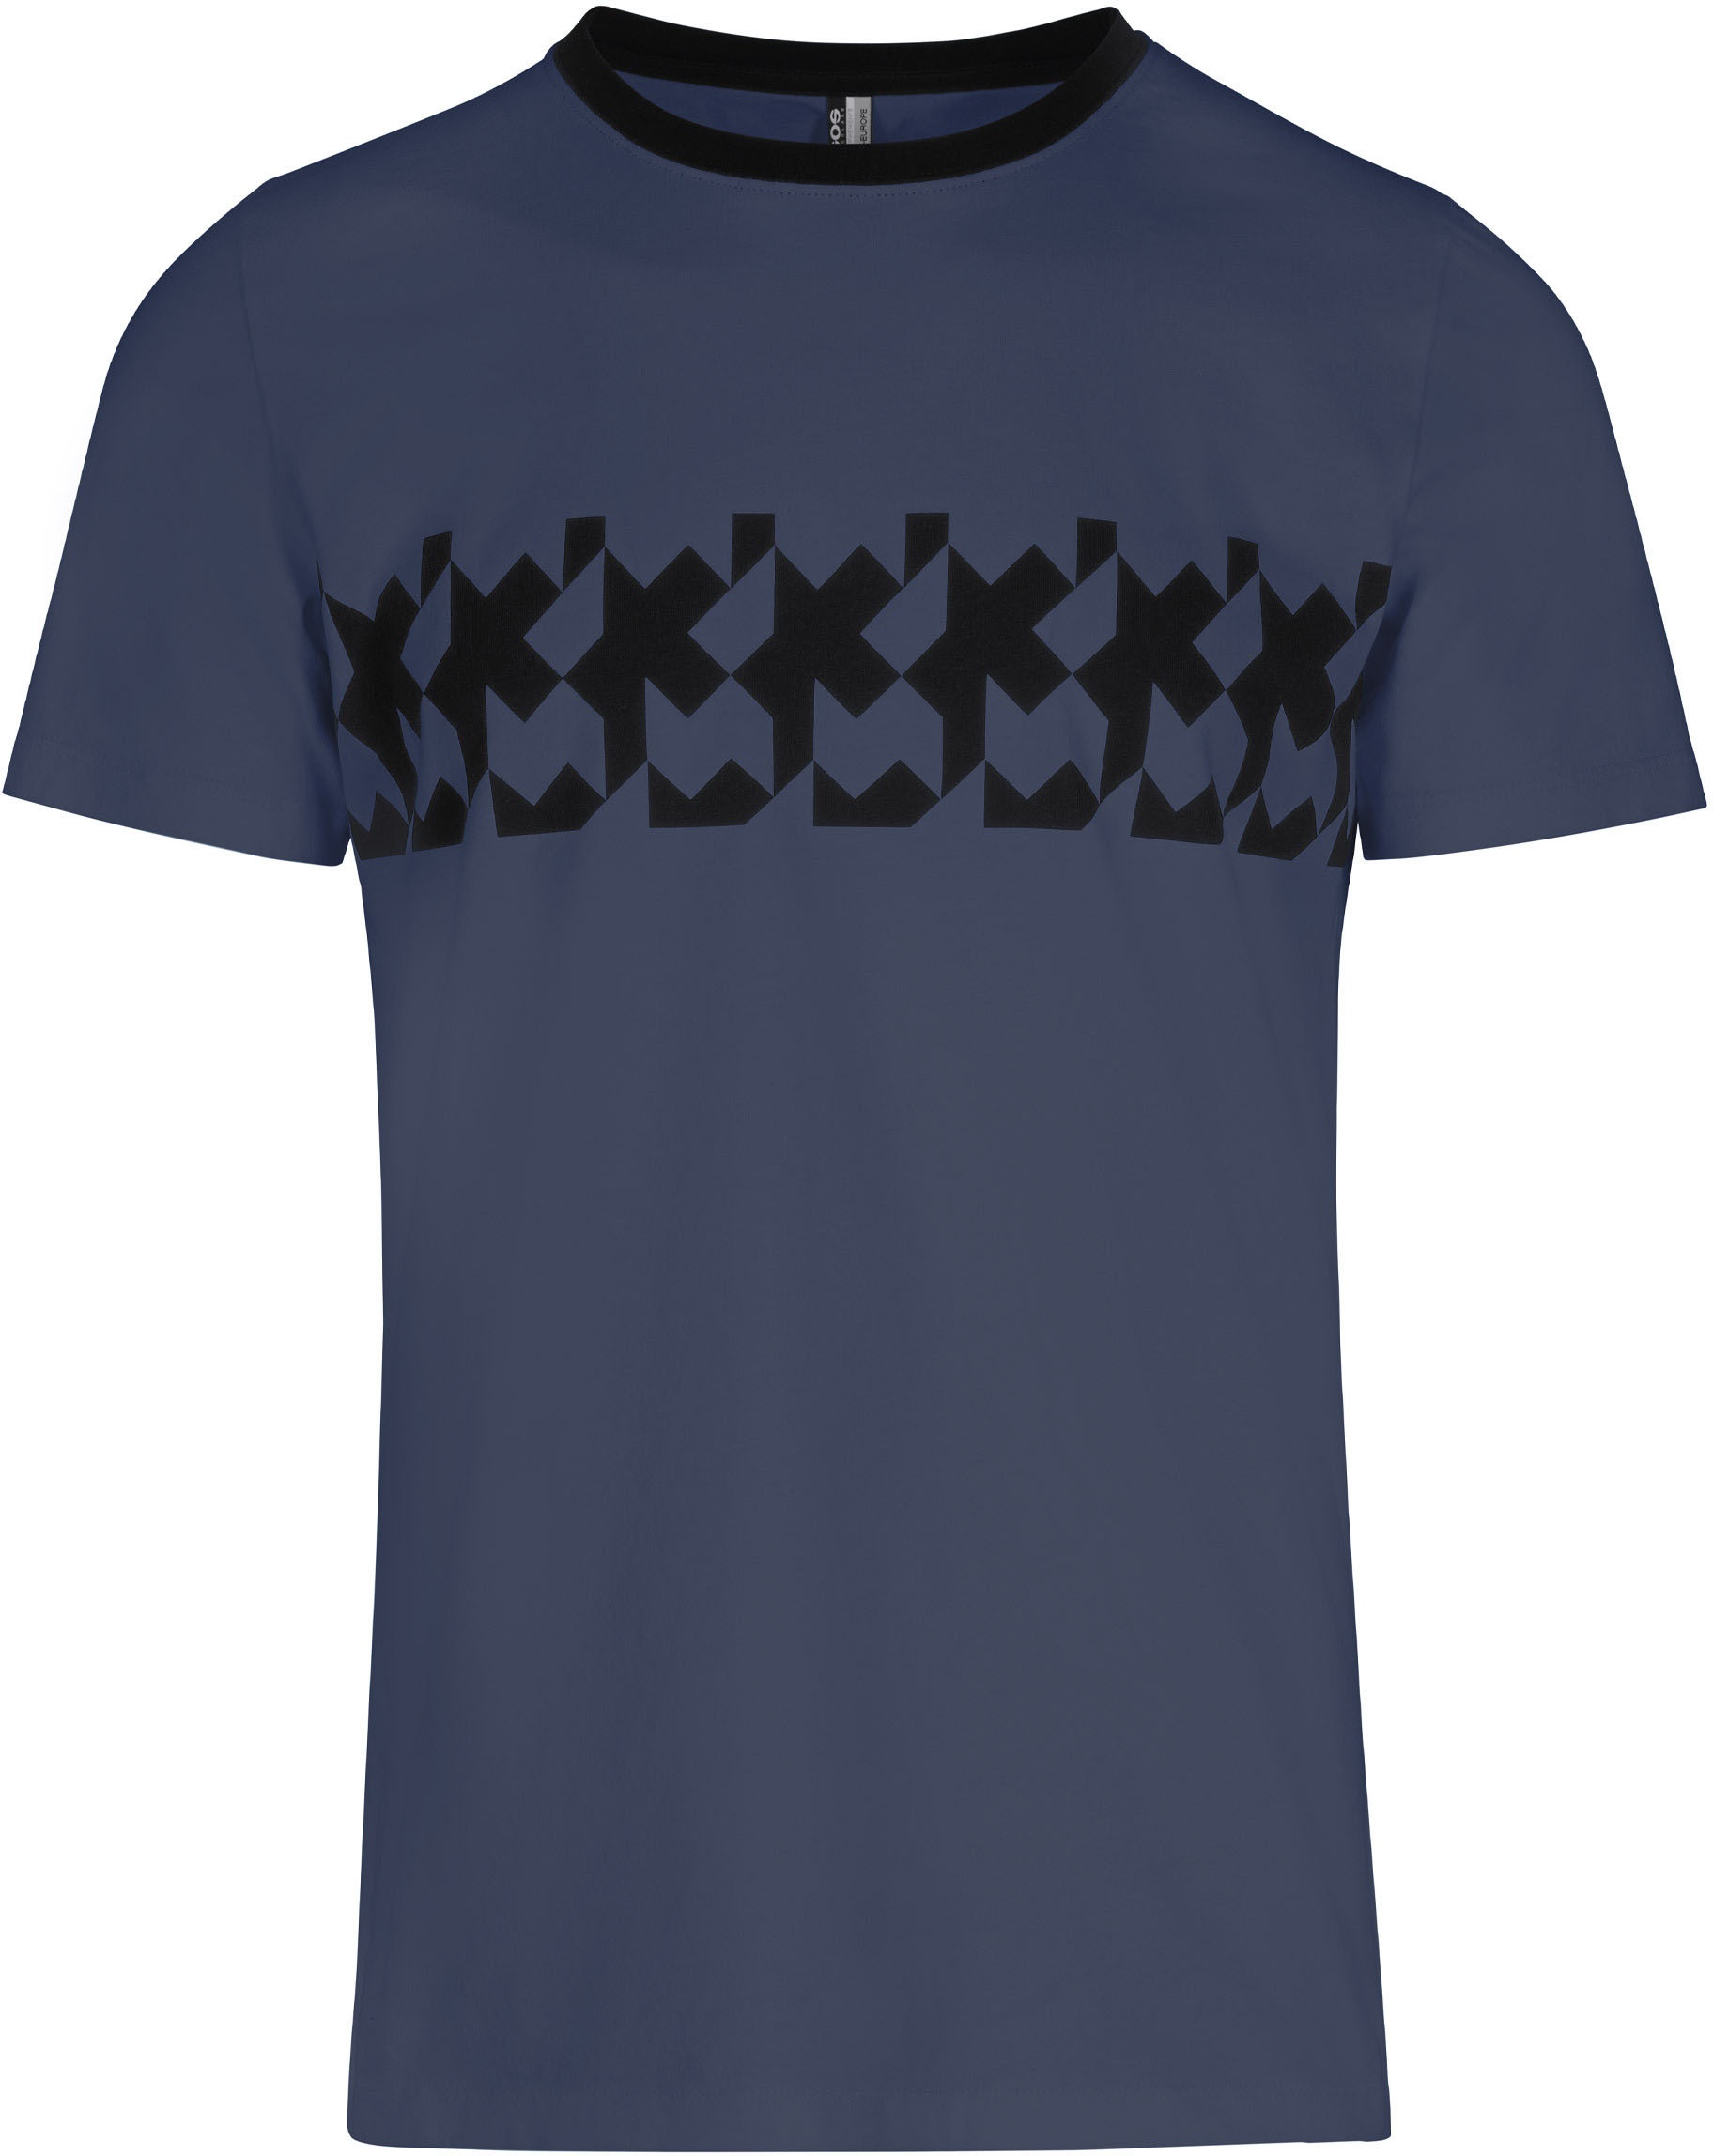 Beklædning - Merchandise - Assos SIGNATURE Summer T-Shirt RS Griffe - Mørkeblå